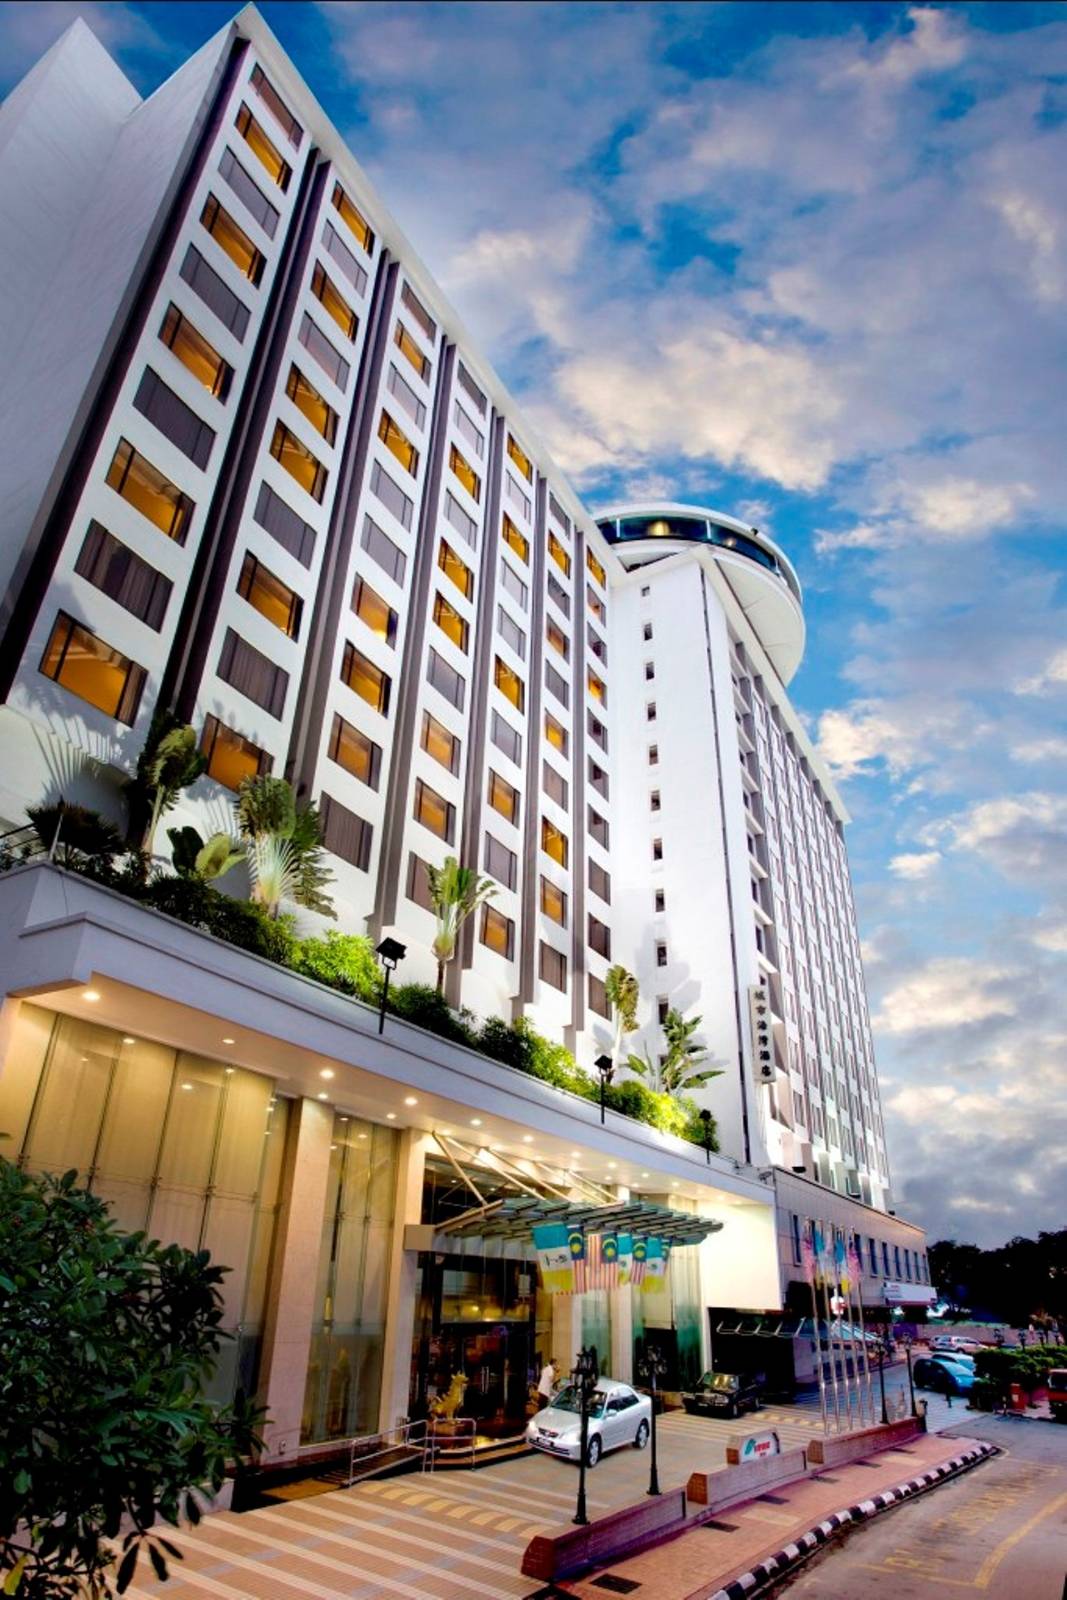 Bayview Hotel Georgetown Penang - 4 HRS star hotel in Penang